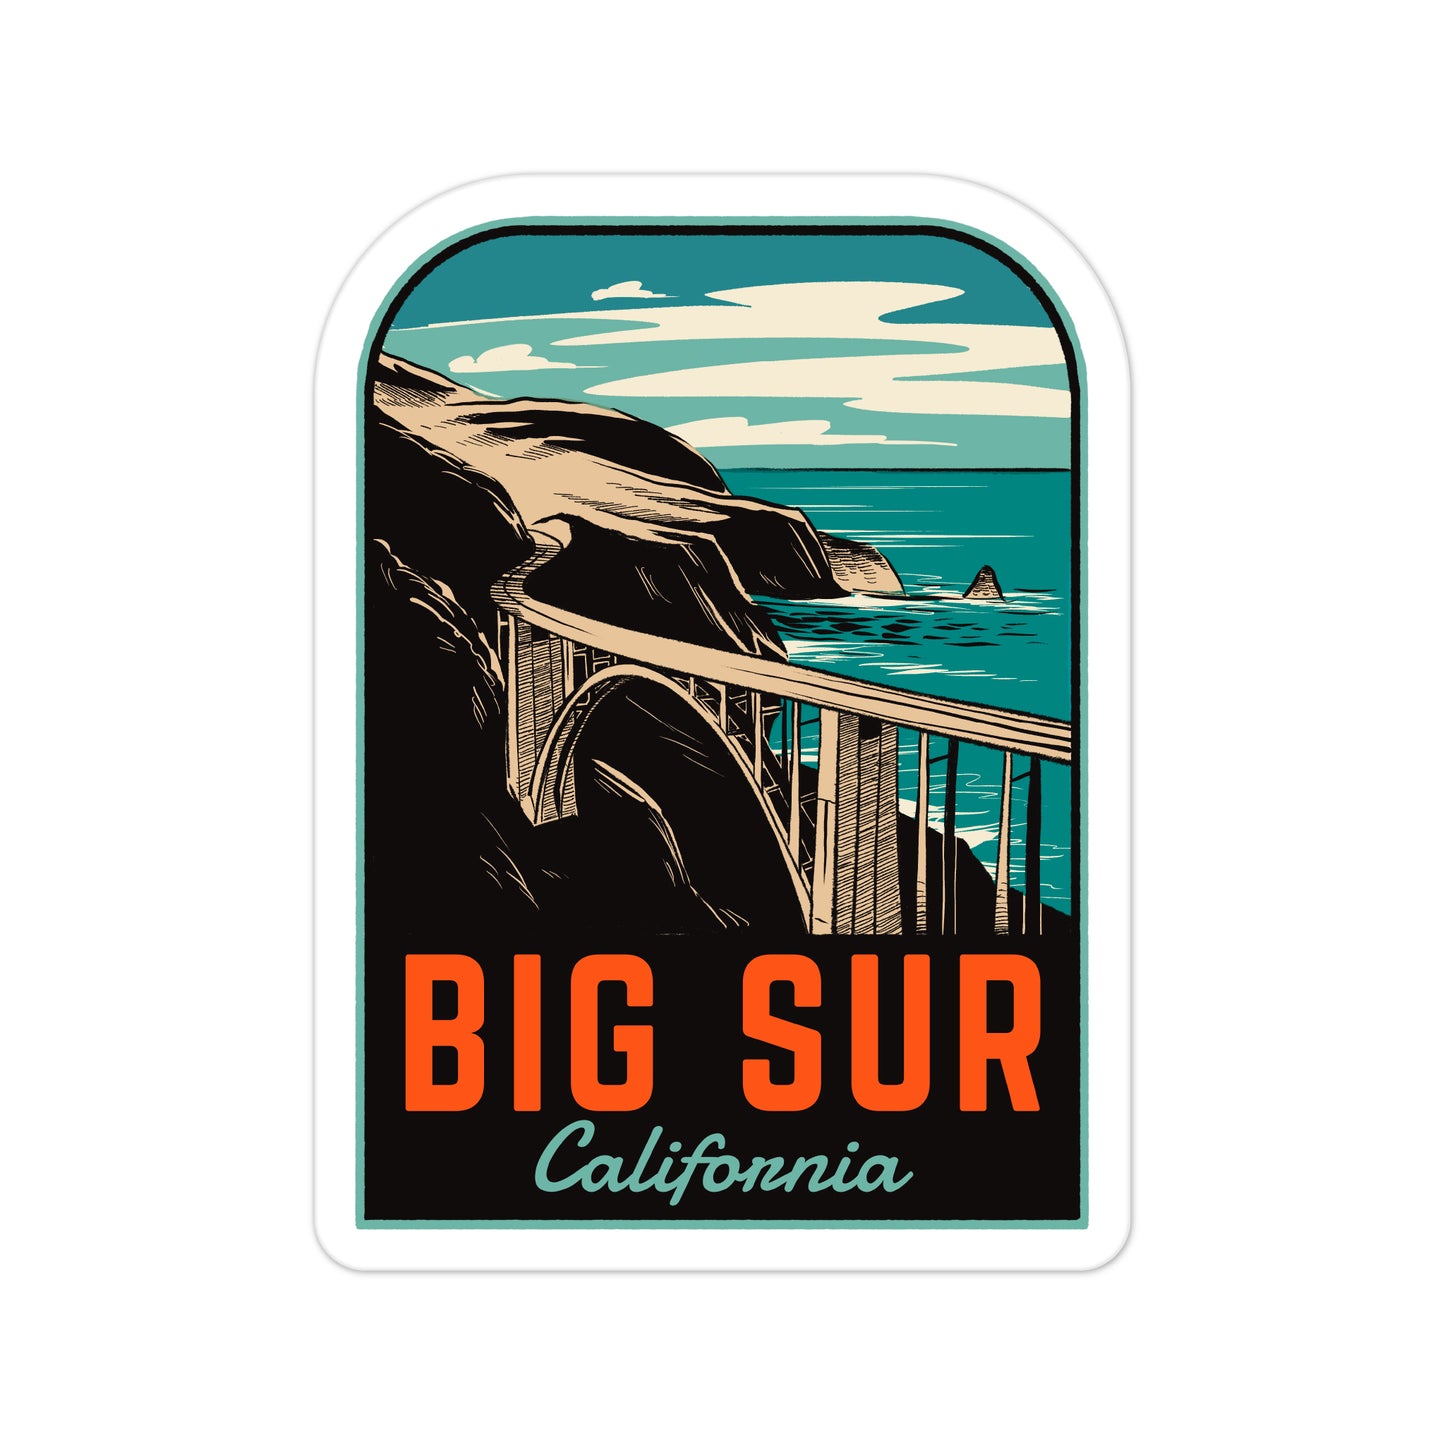 A sticker of Big Sur California